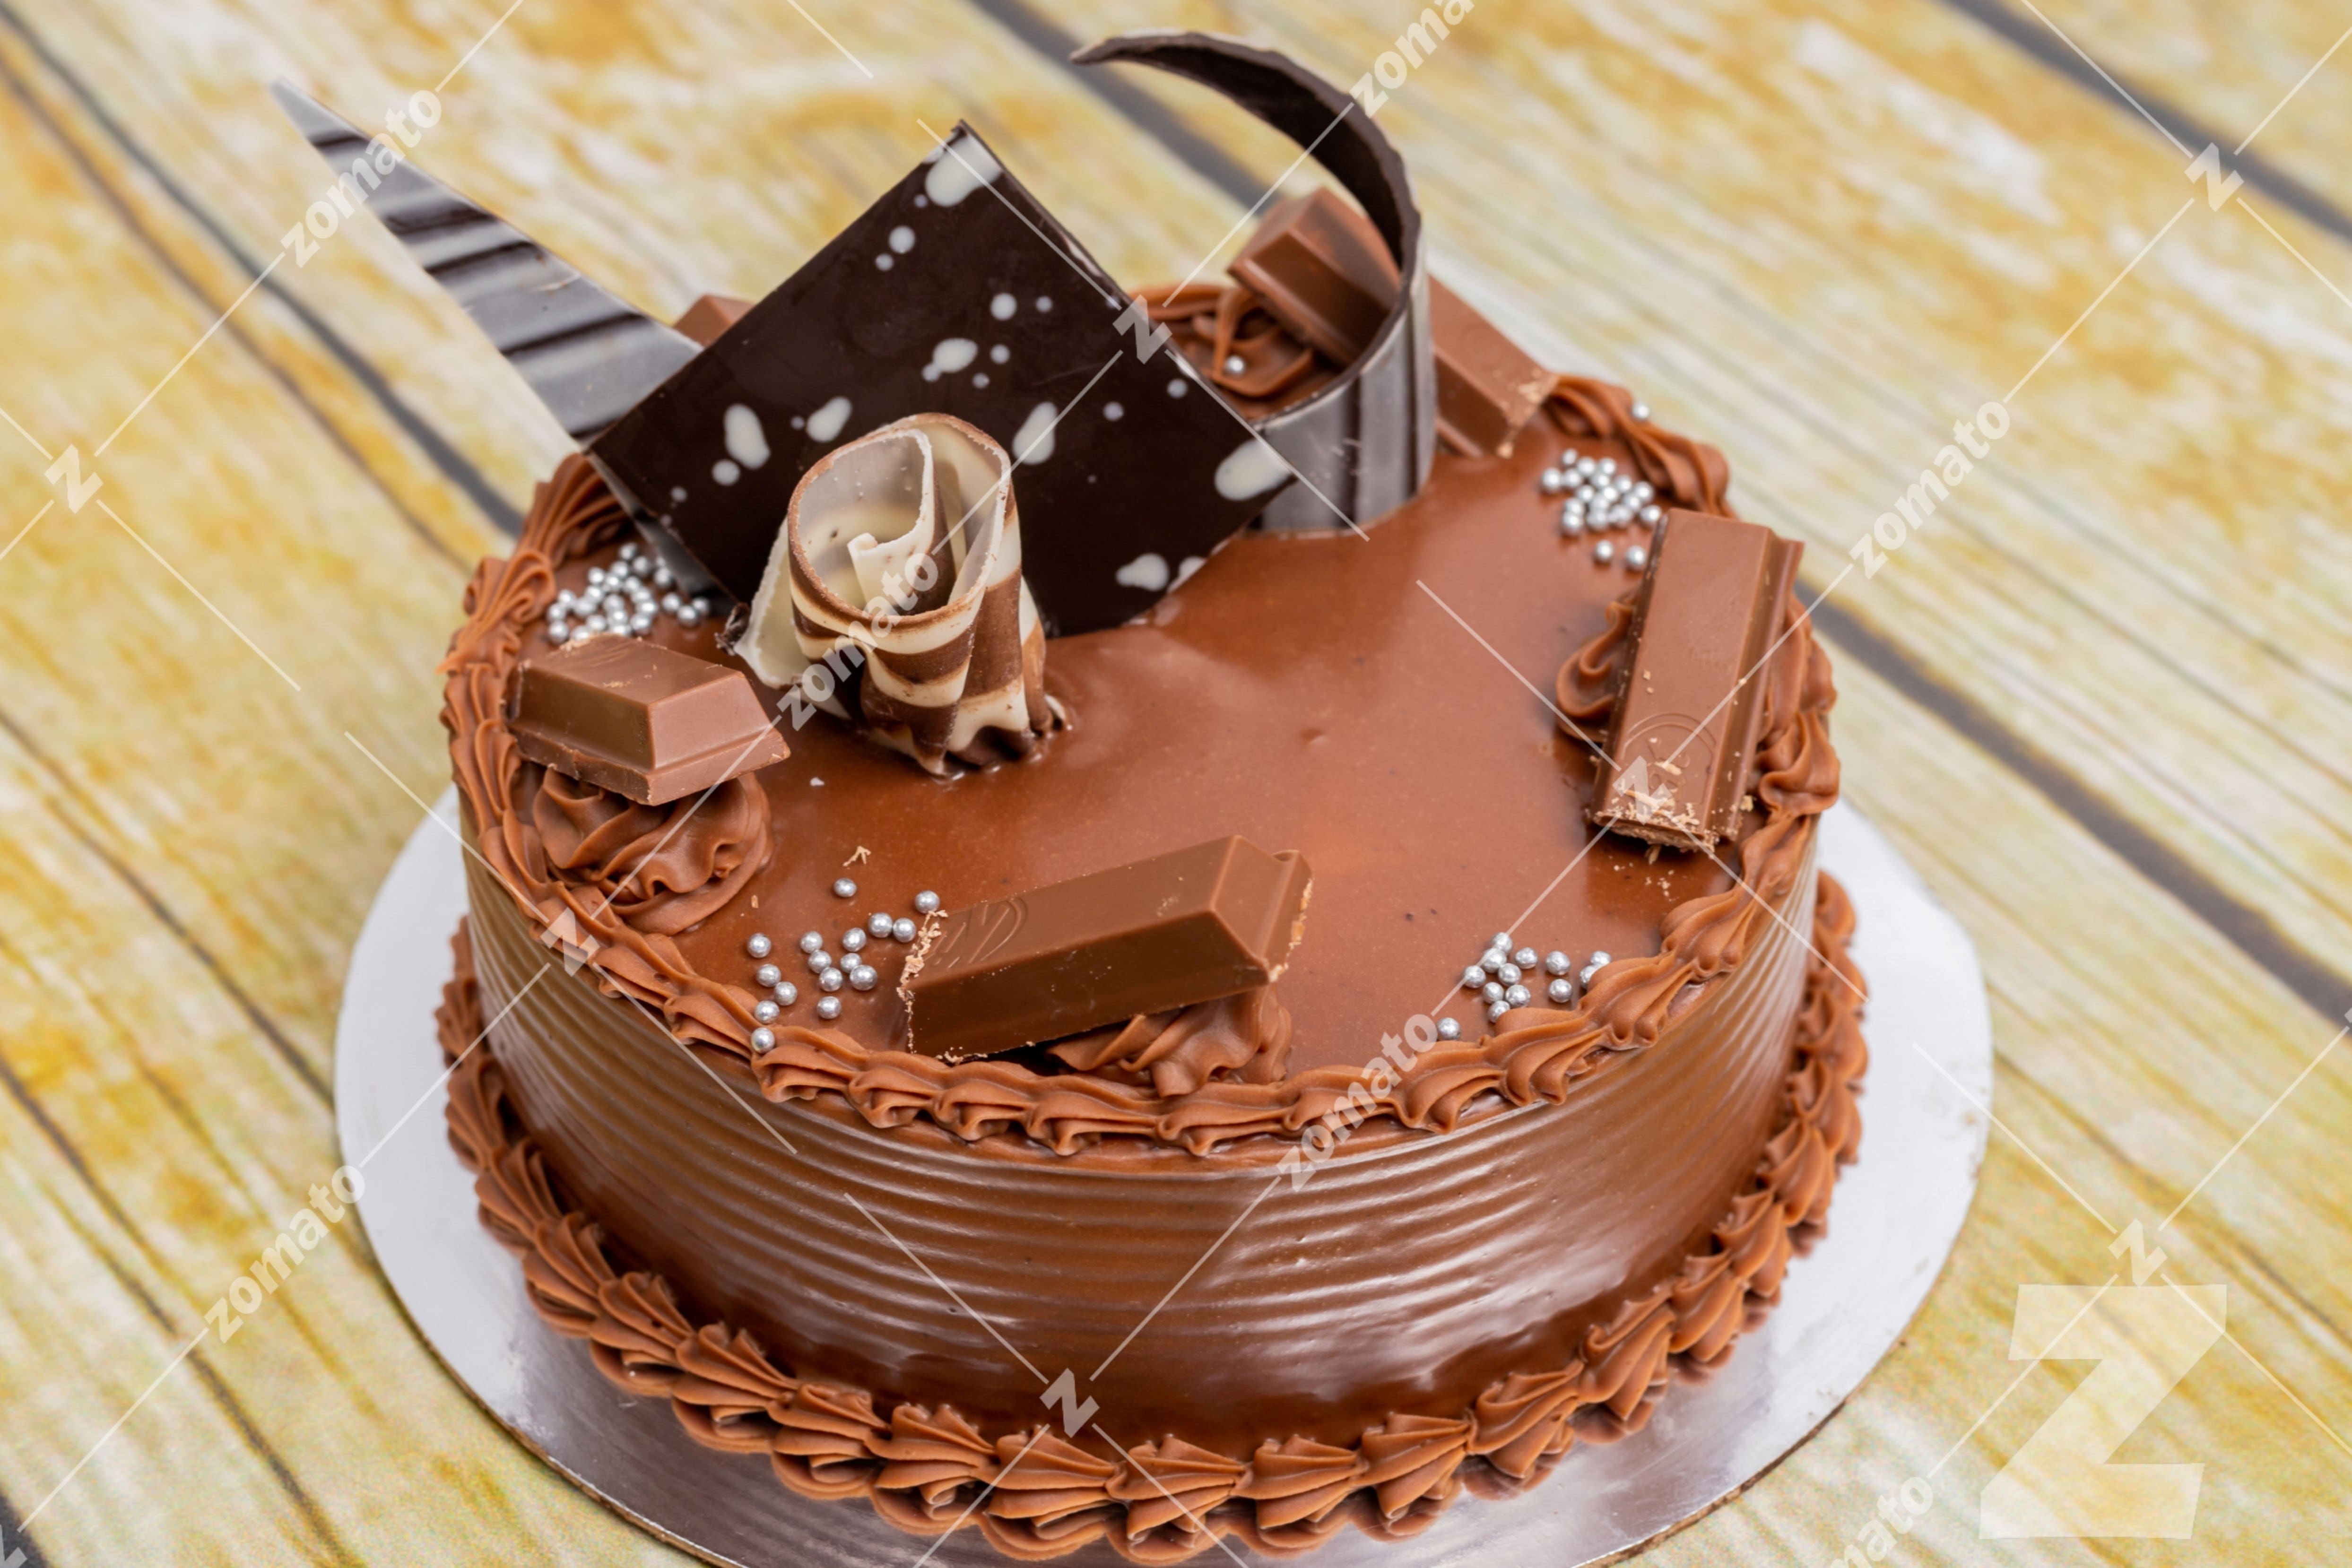 Reviews of Occasions Cakes And More, Chembur, Mumbai | Zomato